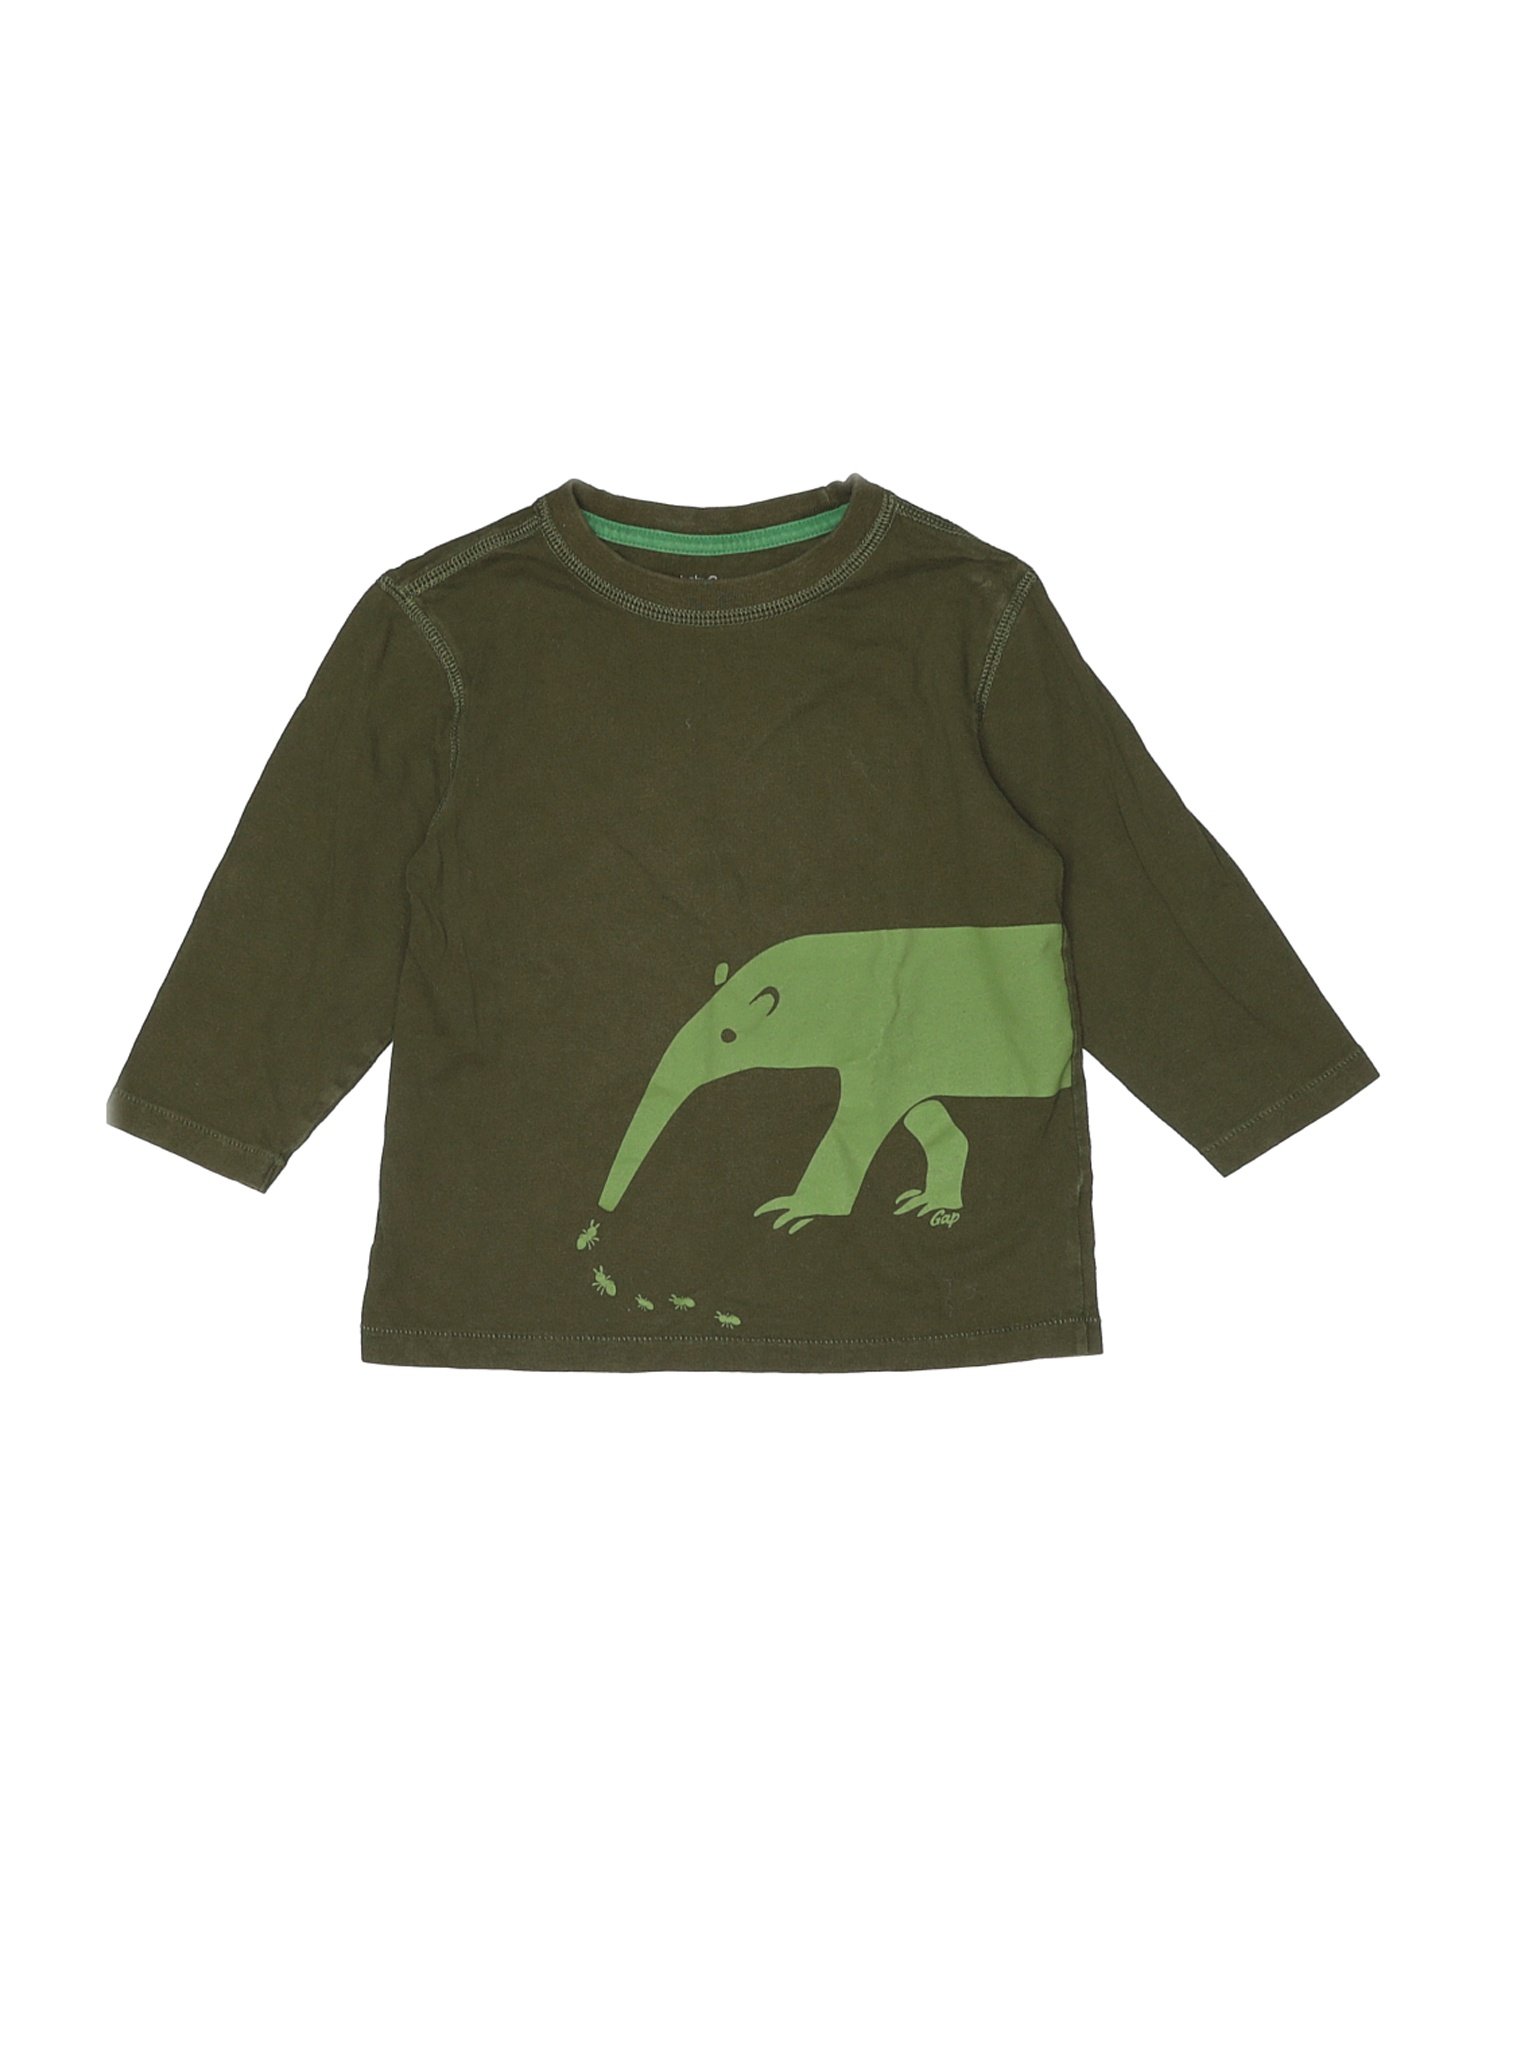 Baby Gap Boys Green Long Sleeve T-Shirt 3T | eBay